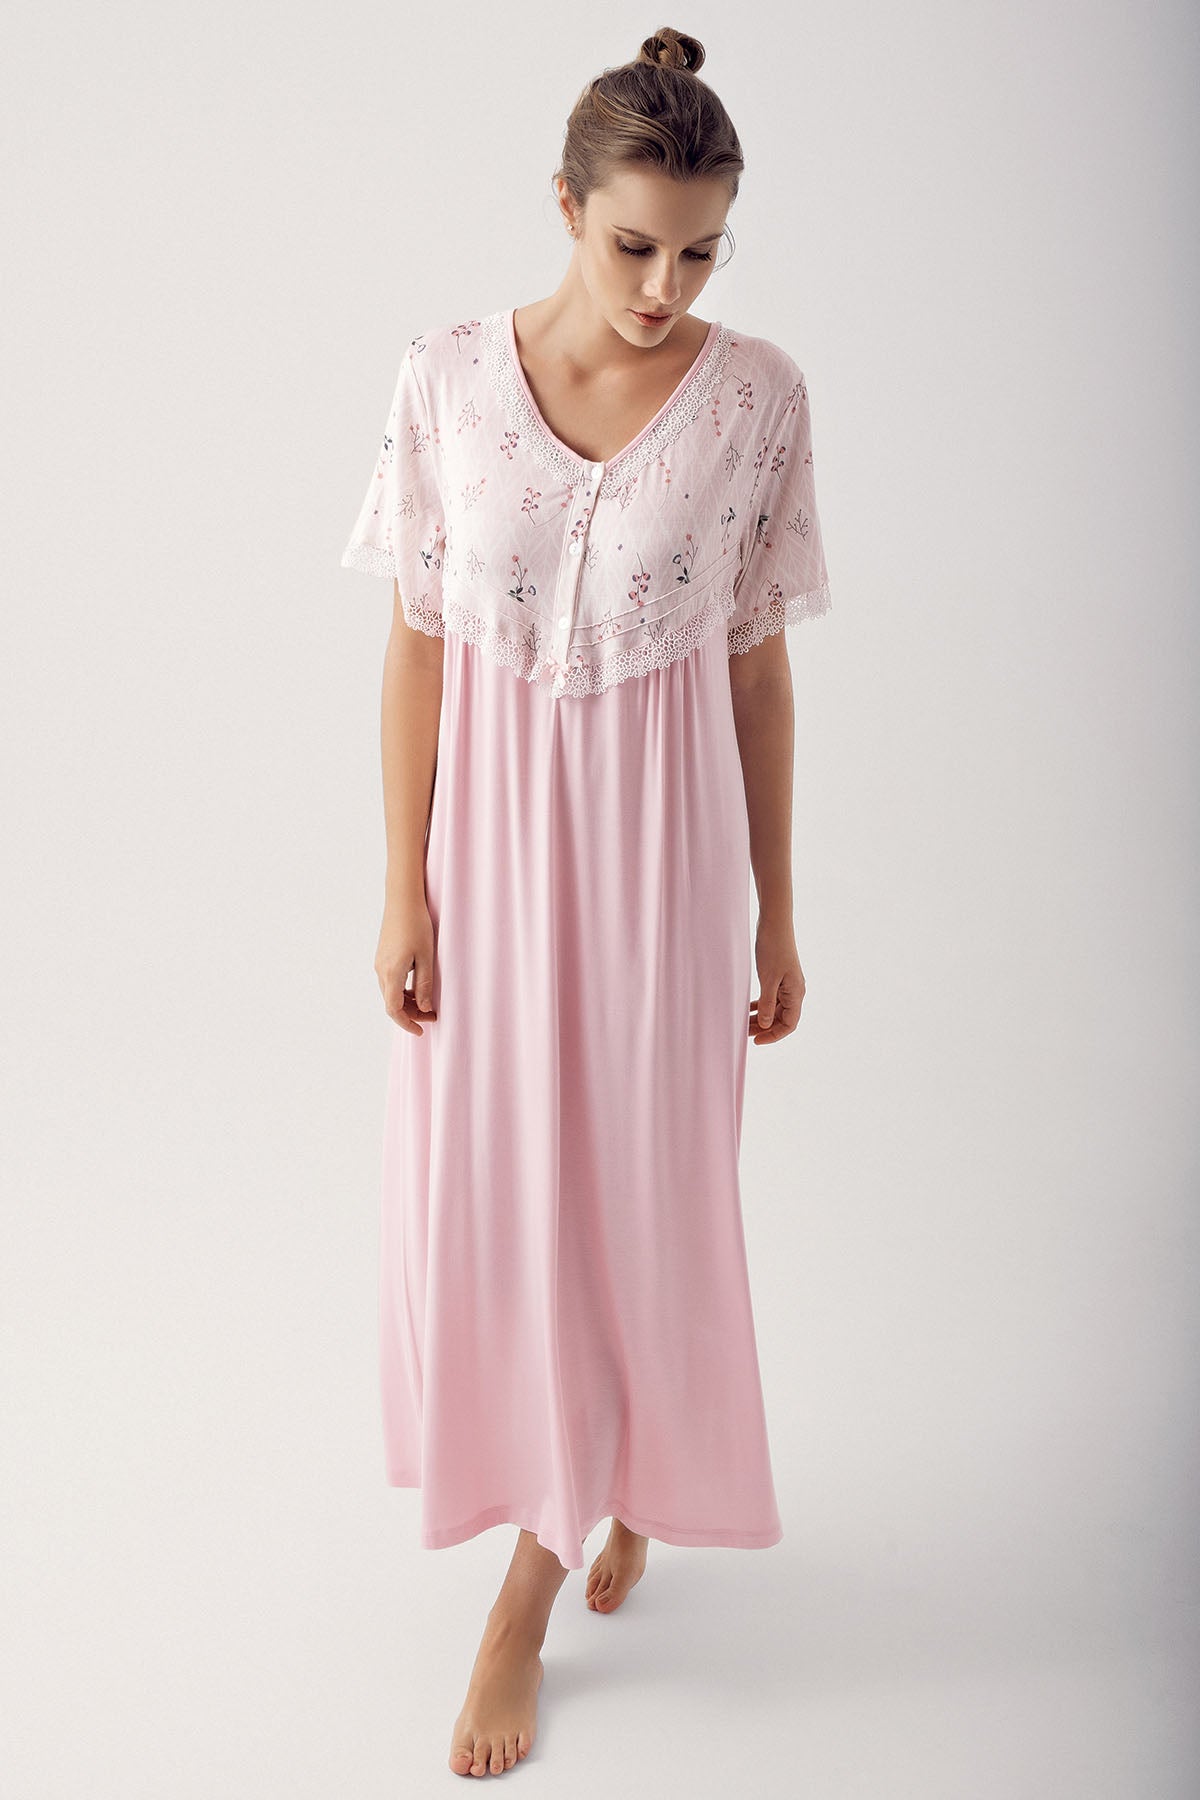 Shopymommy 14125 Lace Flower Pattern Maternity & Nursing Nightgown Powder